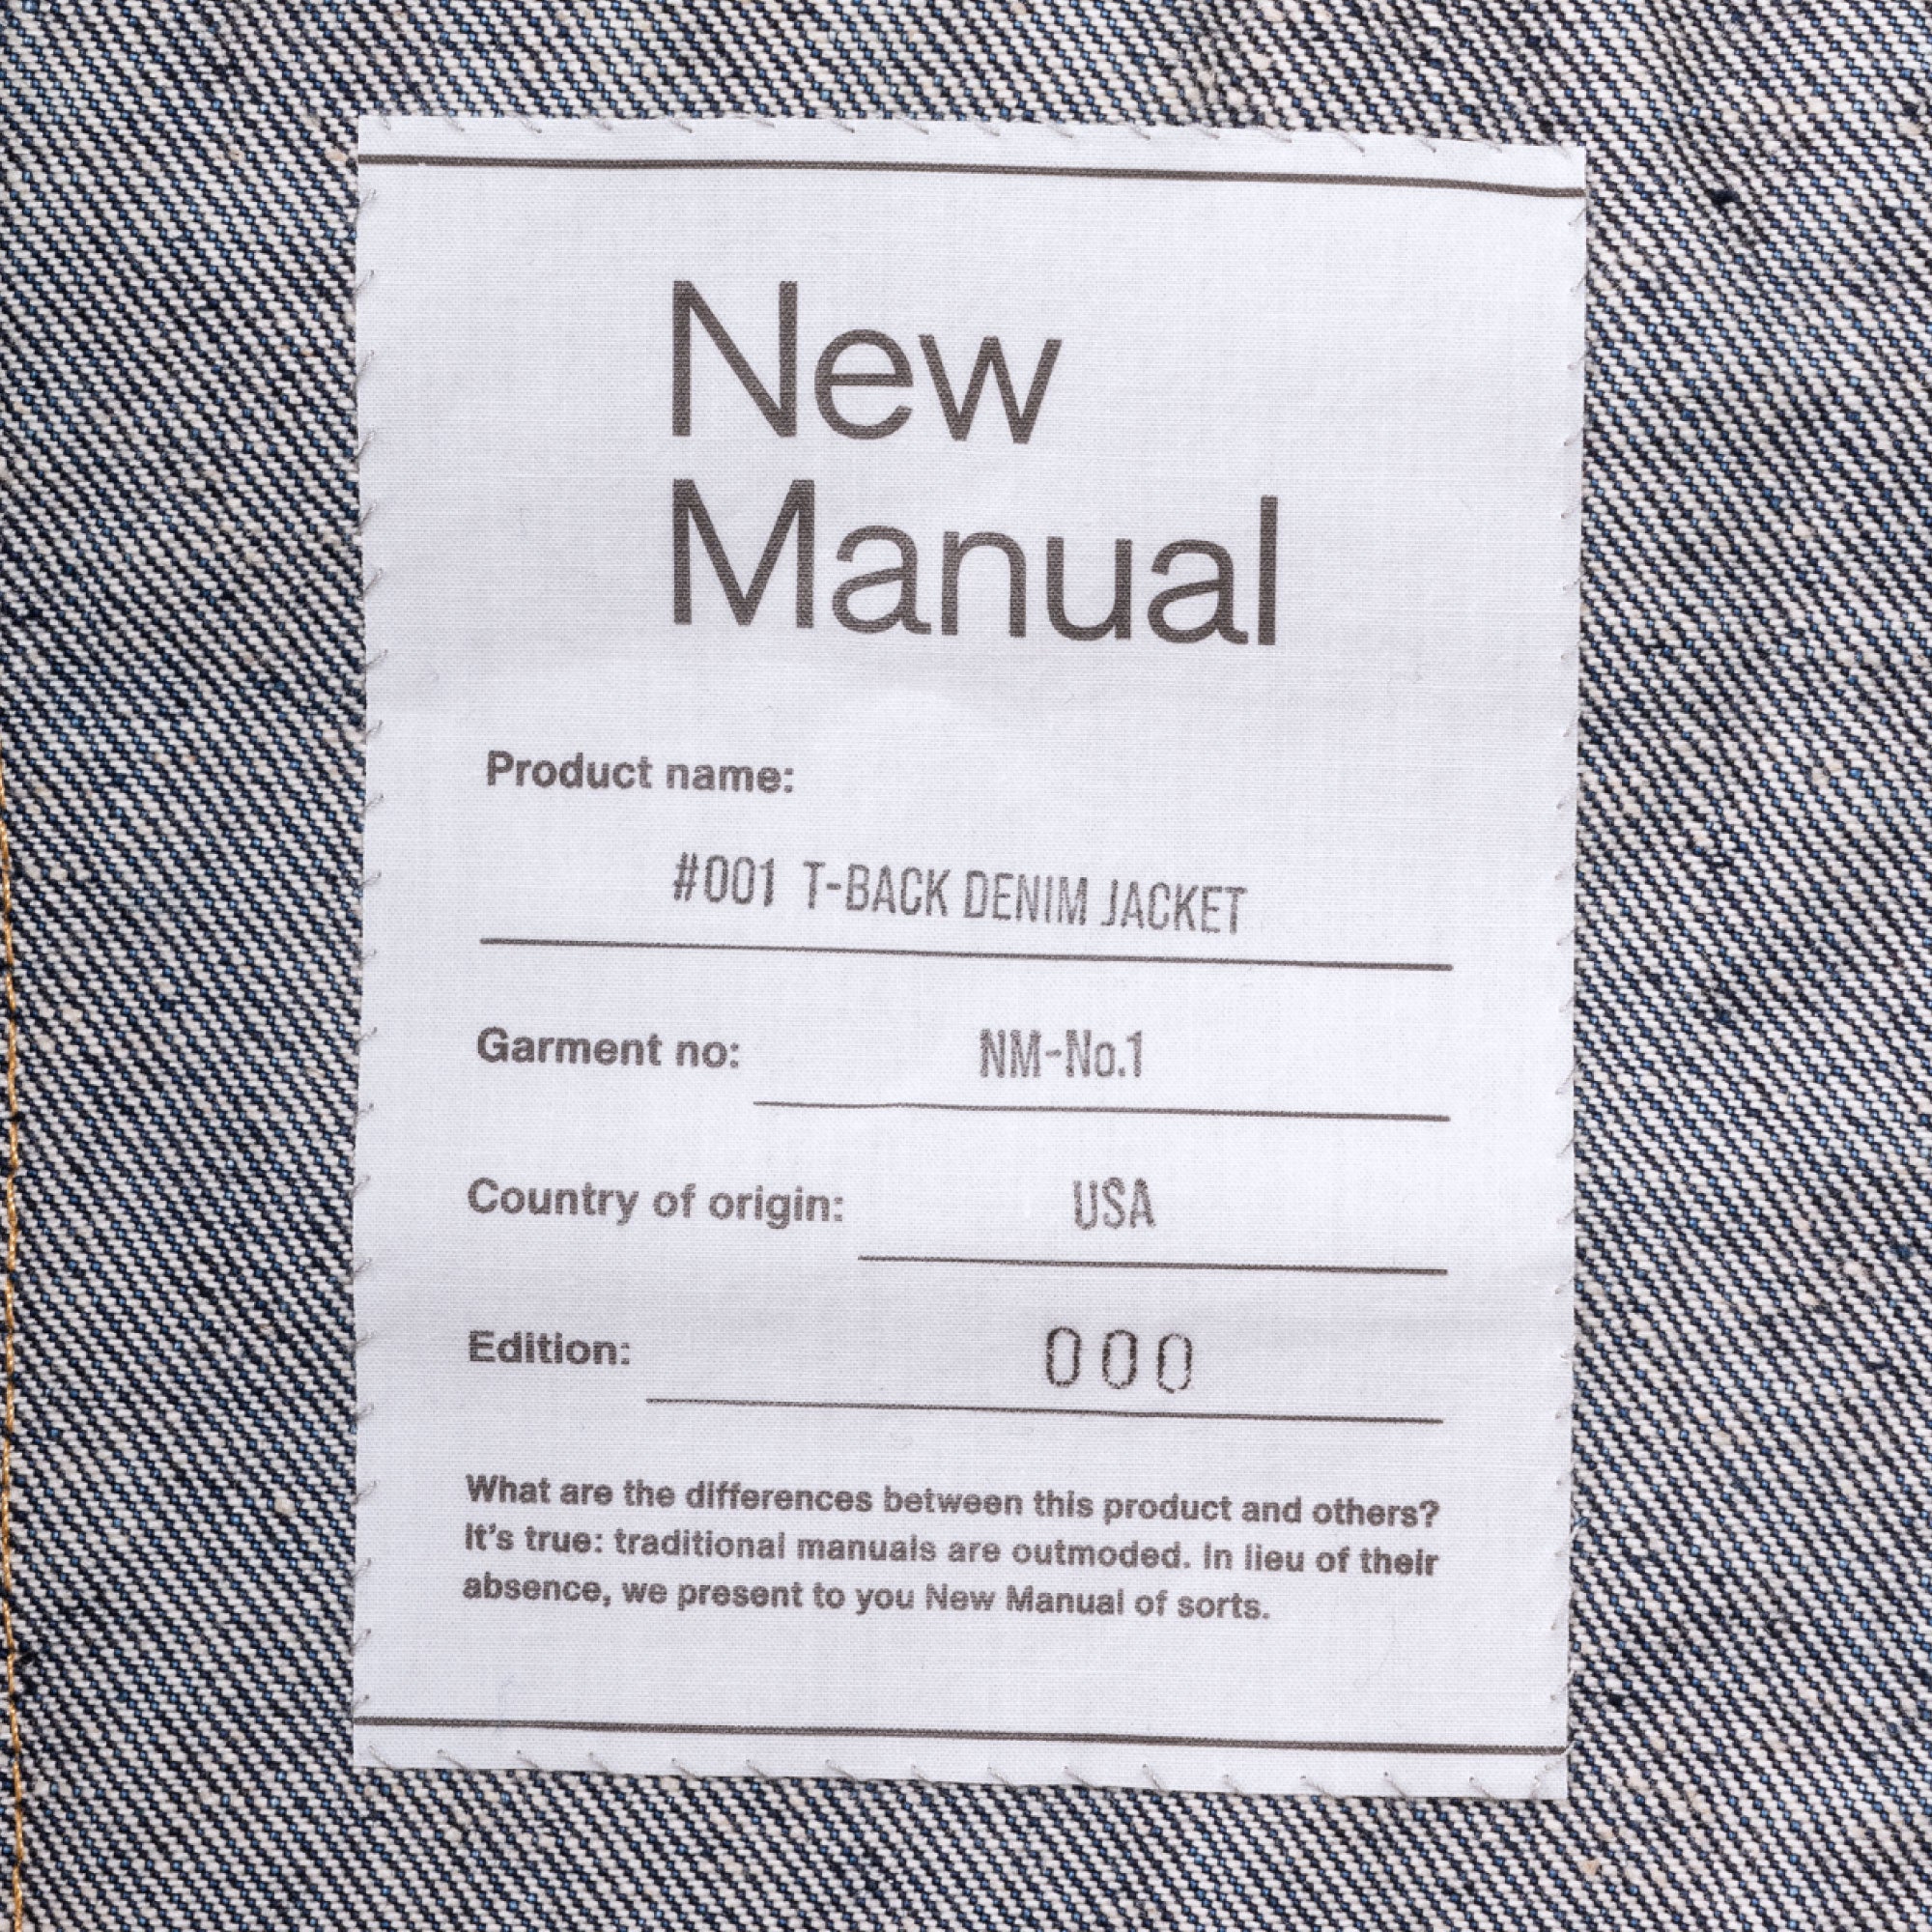 Levinew manual 001 t-back denim jacket / ow